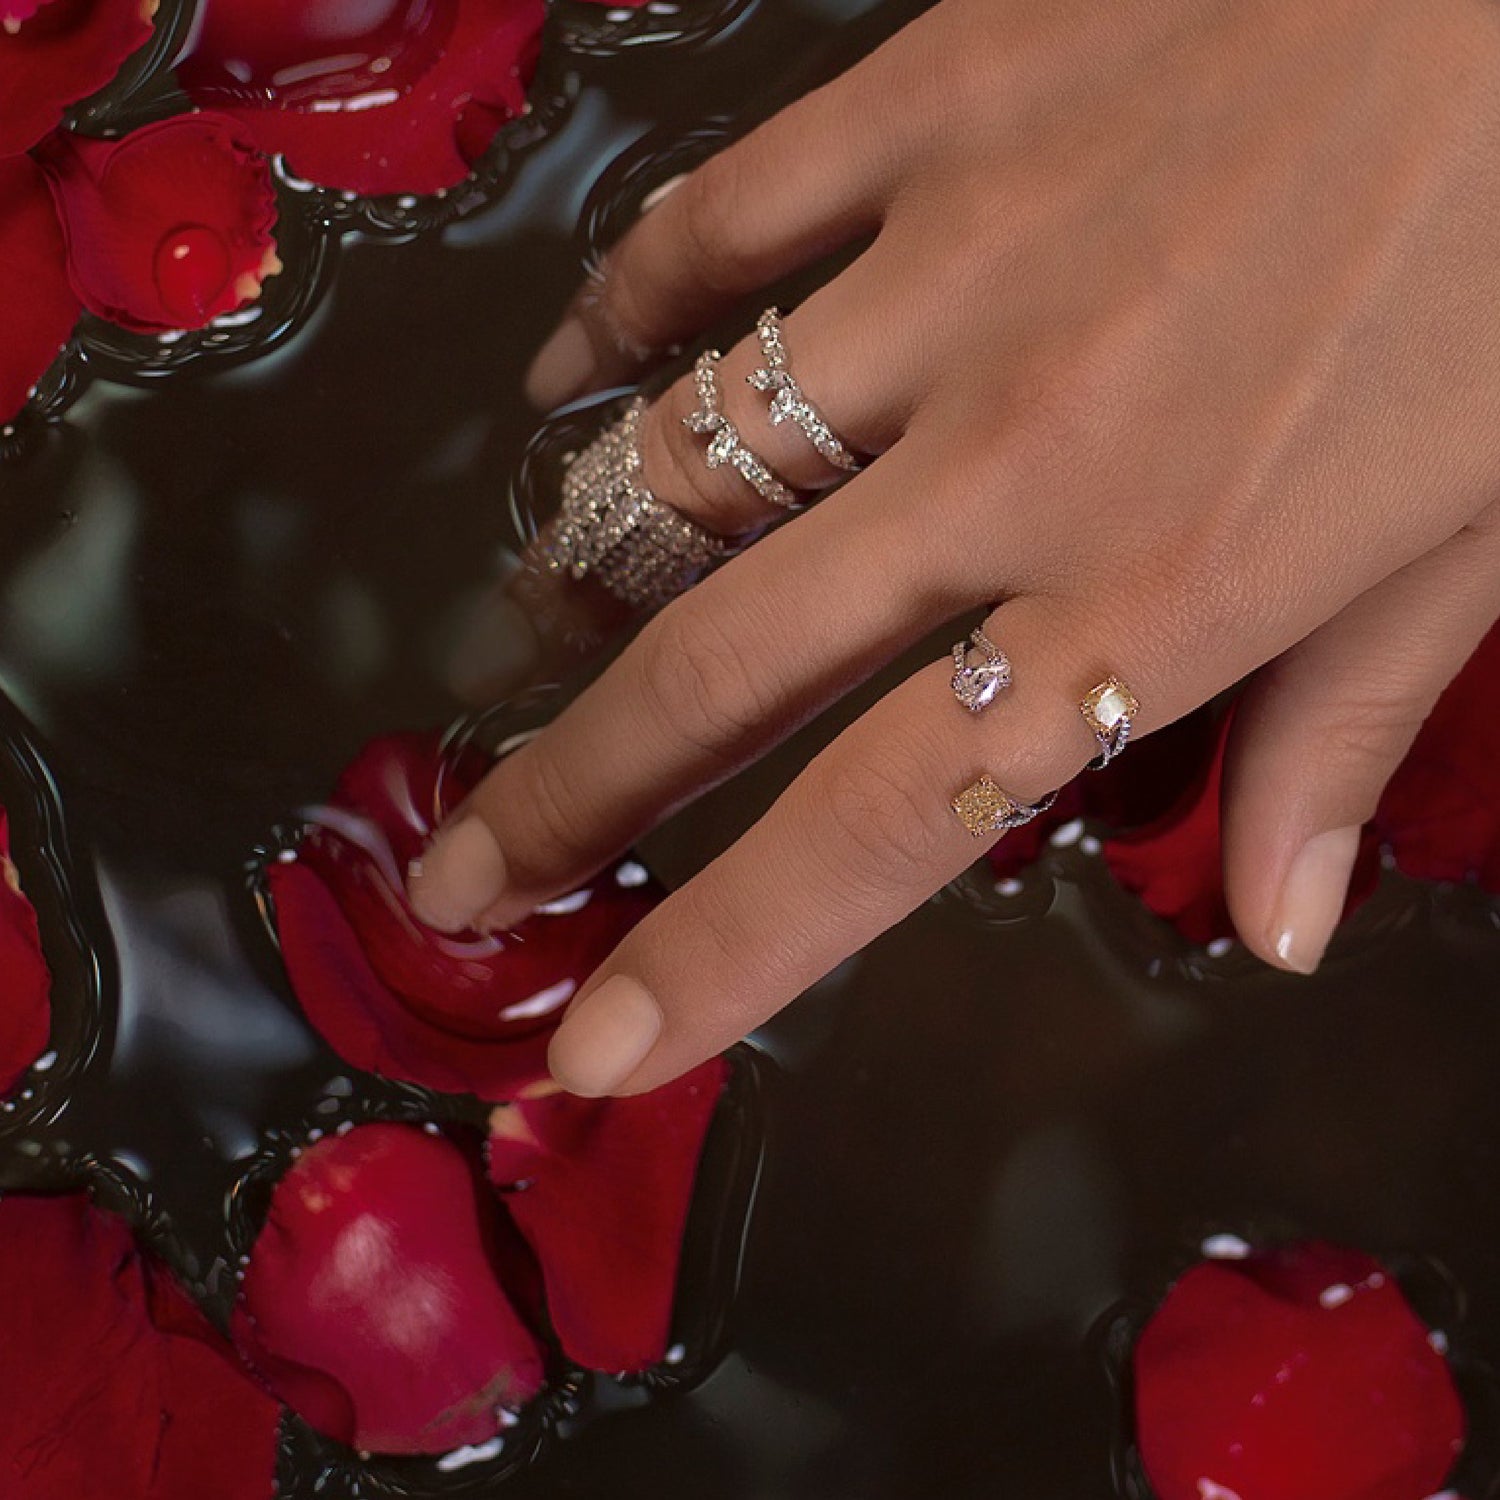 Solitaire ring in Dubai | Wedding ring in Dubai